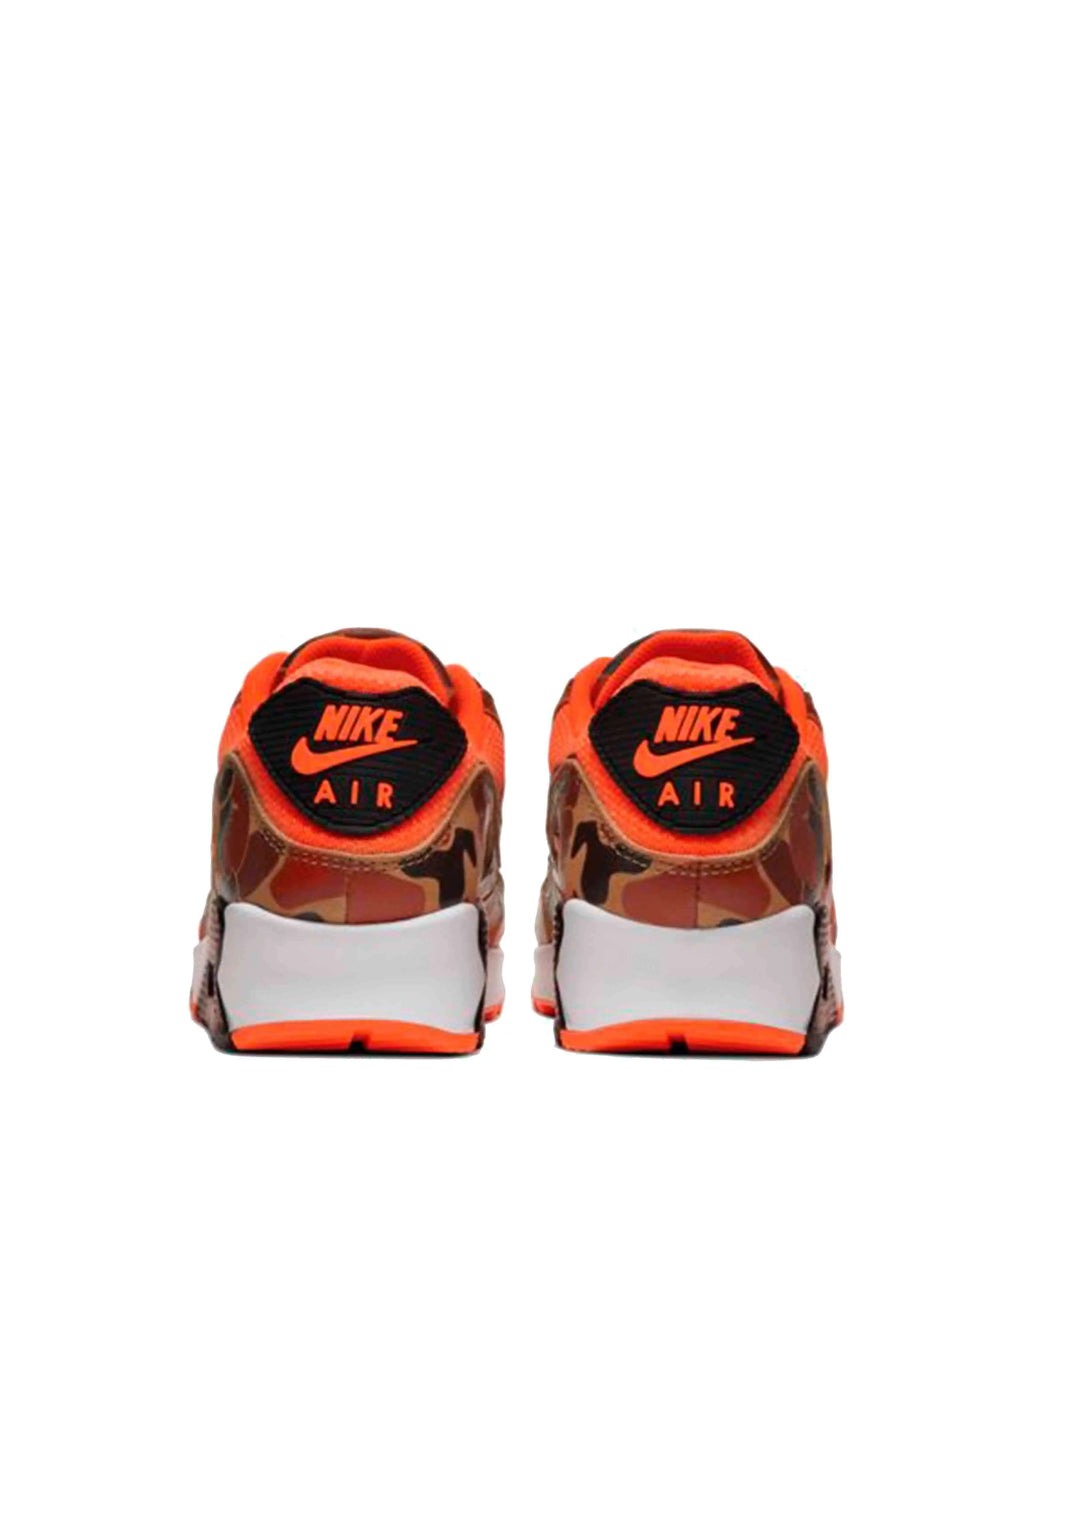 Nike Air Max 90 Duck Camo Orange Nike